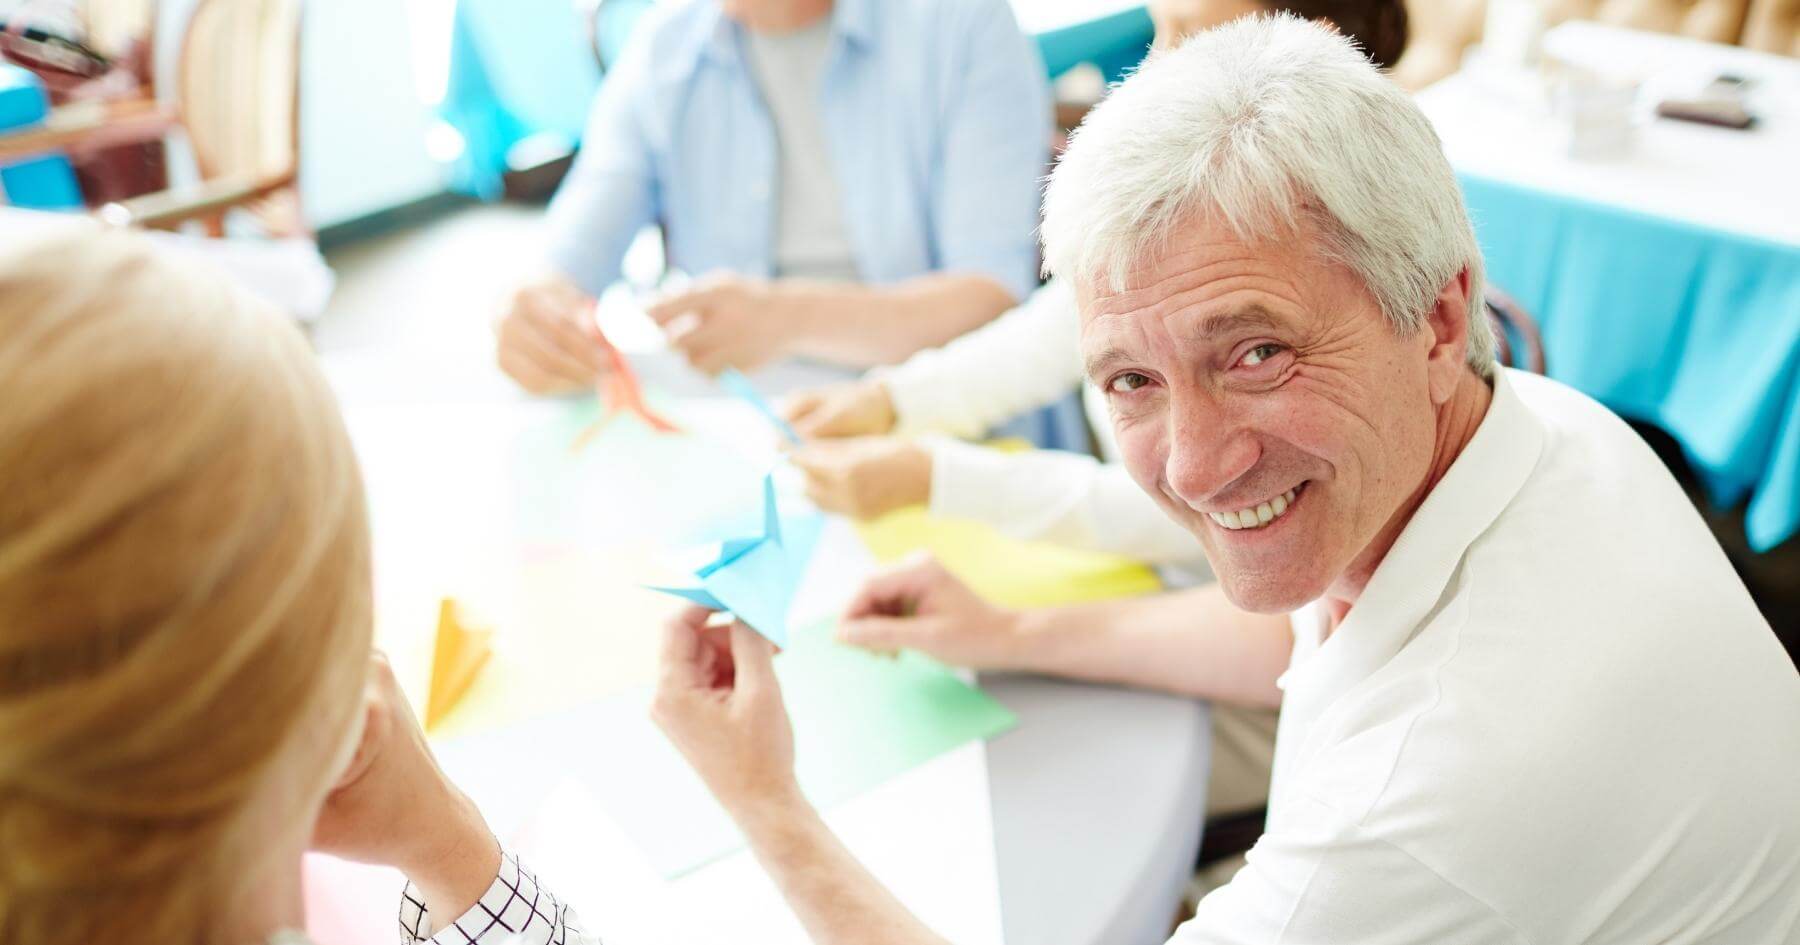 6 Activities That Help Fight Senior Loneliness